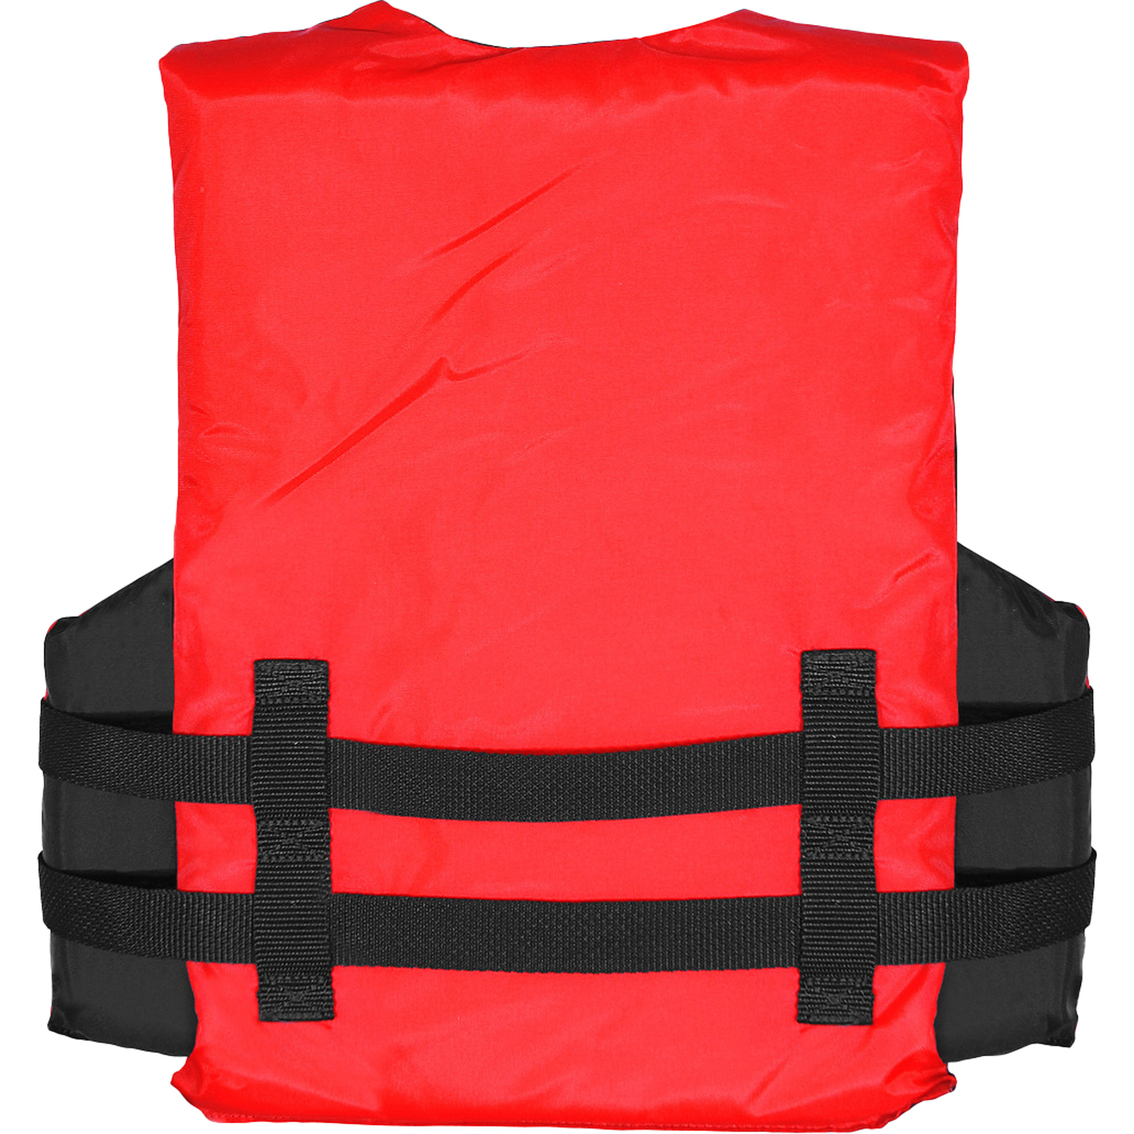 Kwik Tek AirHead General Purpose Life Vest, Red, Youth - Image 2 of 2